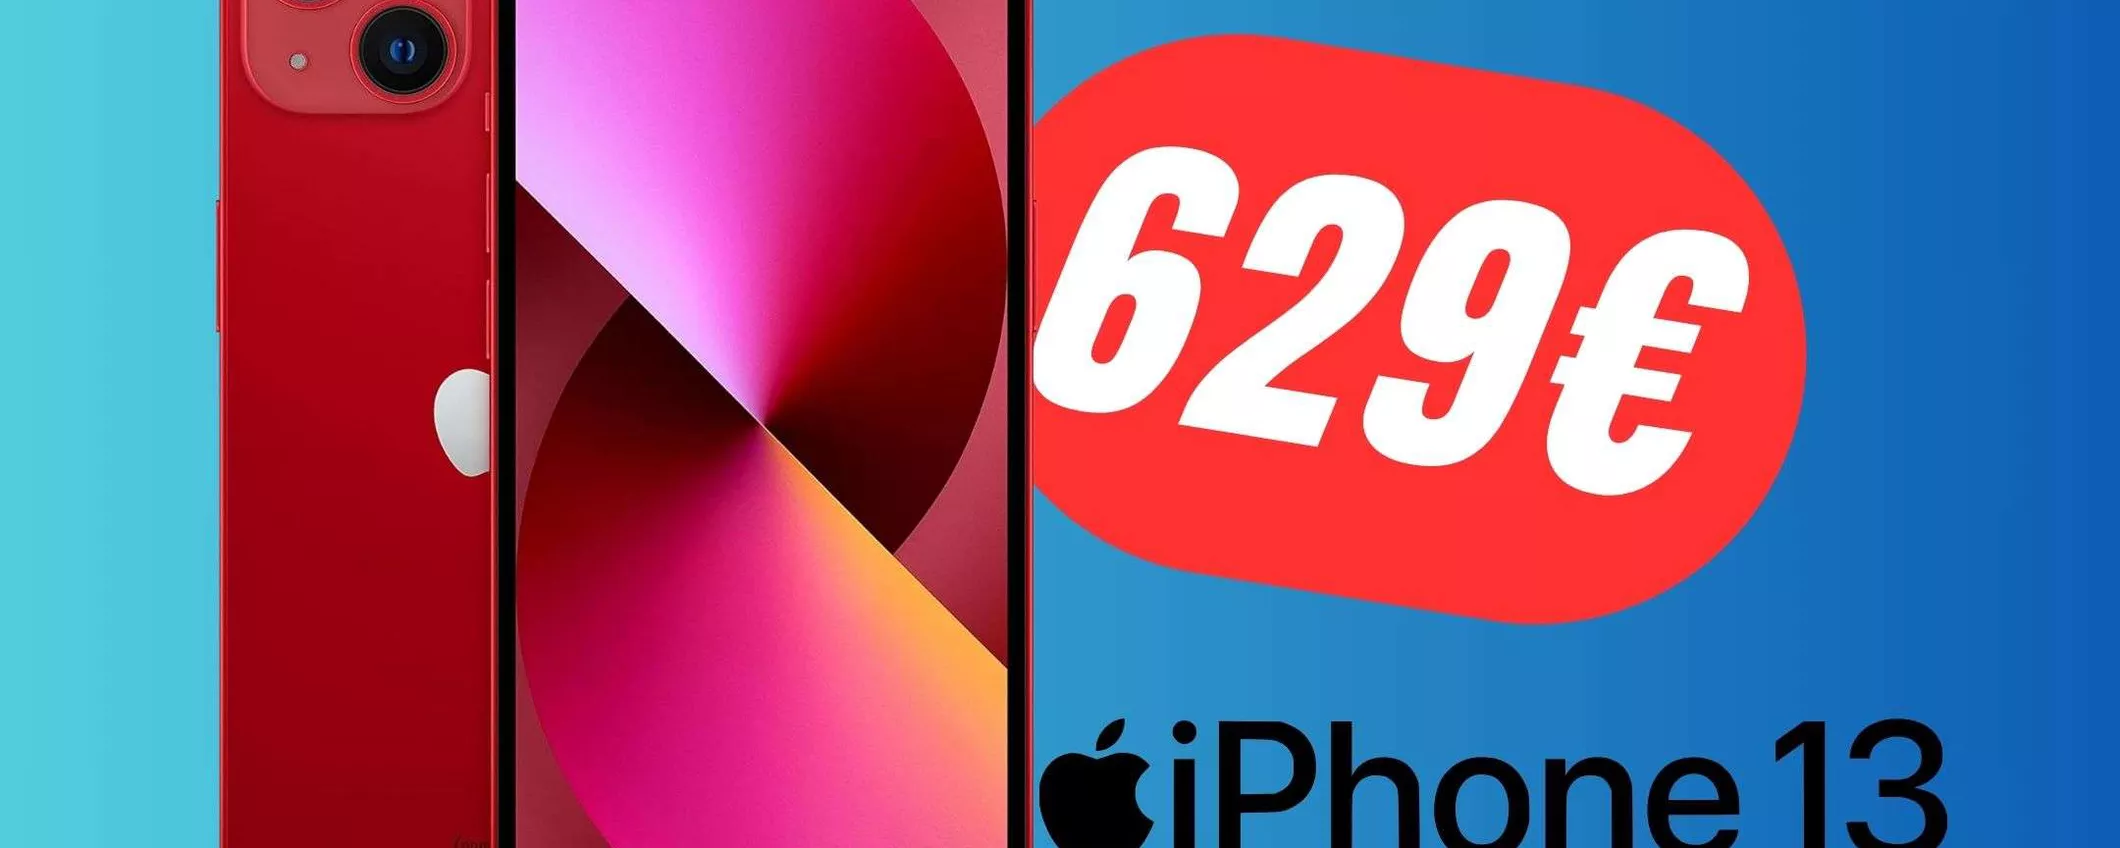 Apple iPhone 13 (PRODUCT) RED è in OFFERTA su Amazon!